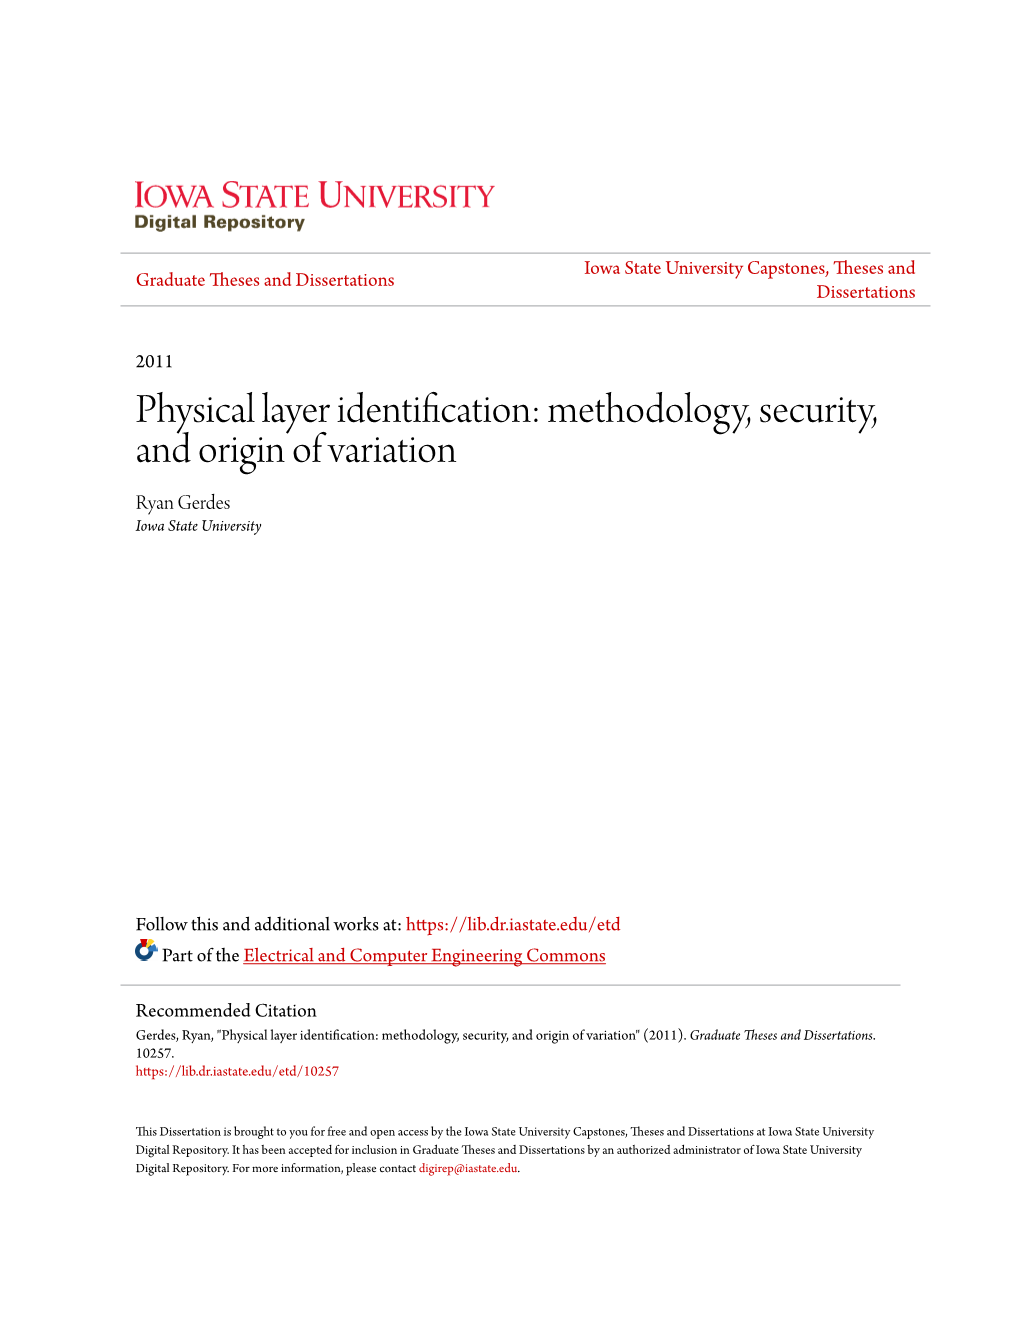 Physical Layer Identification: Methodology, Security, and Origin of Variation Ryan Gerdes Iowa State University